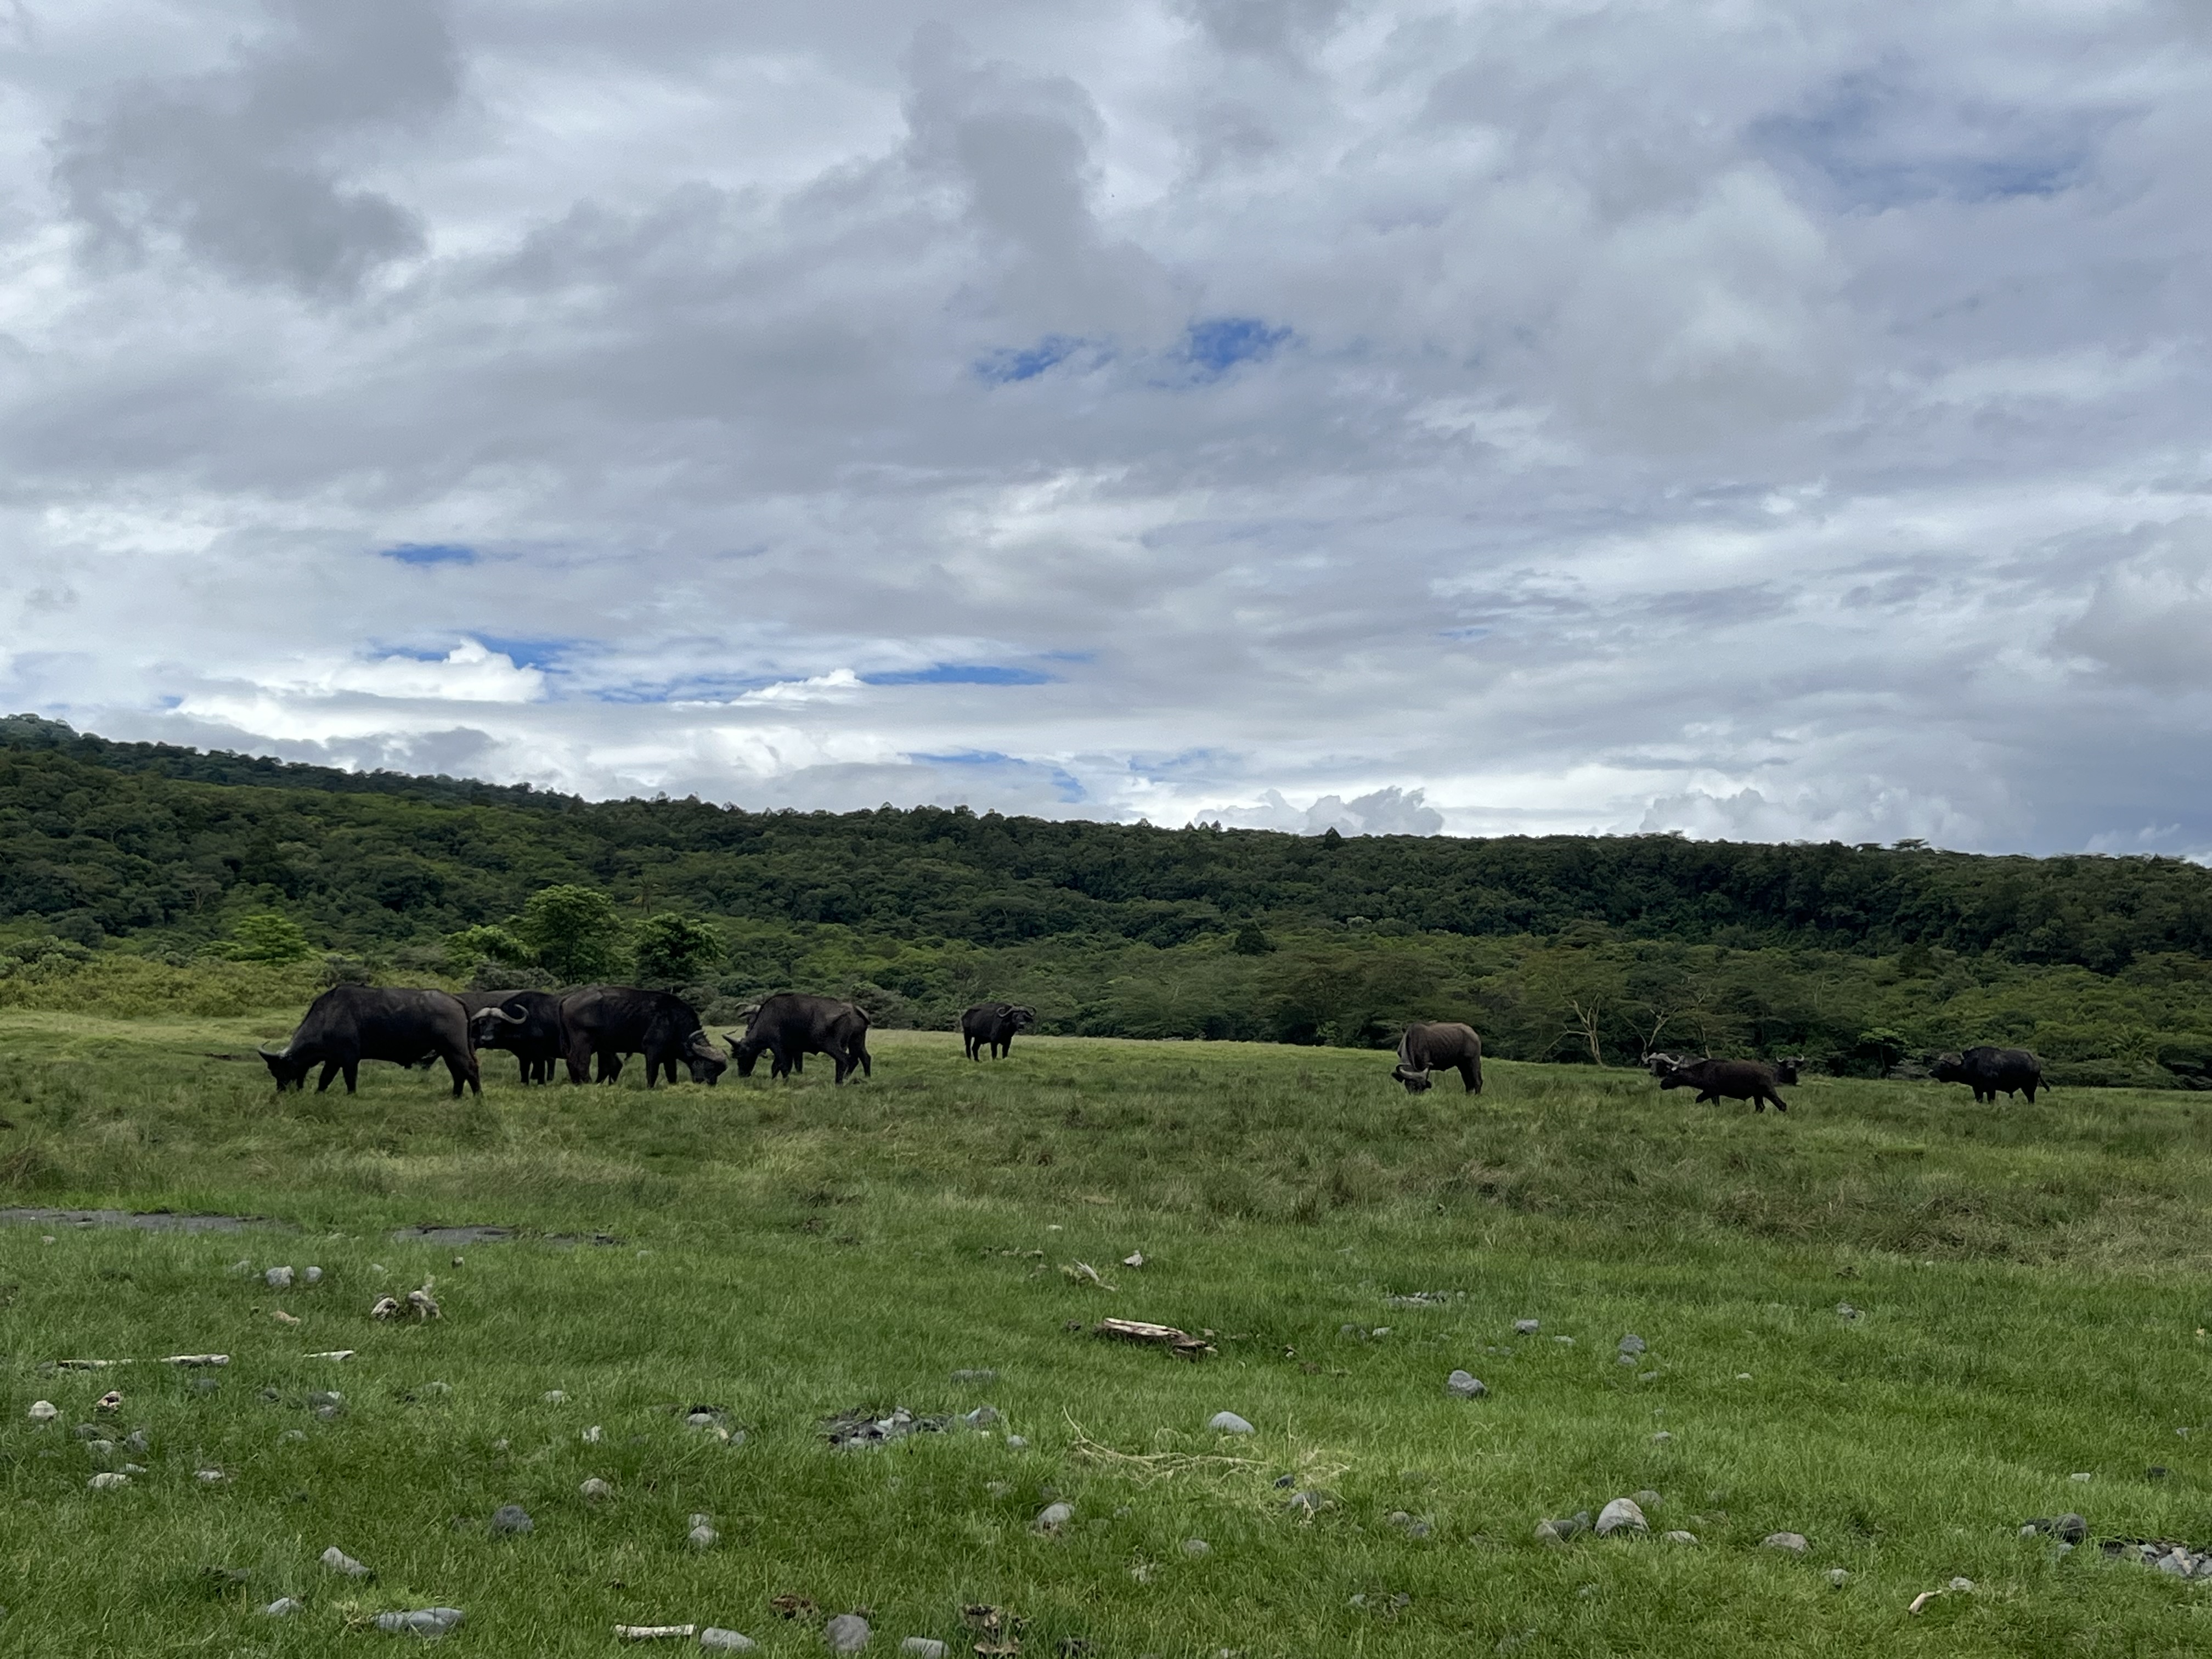 My first ever walking safari at Arusha National Park